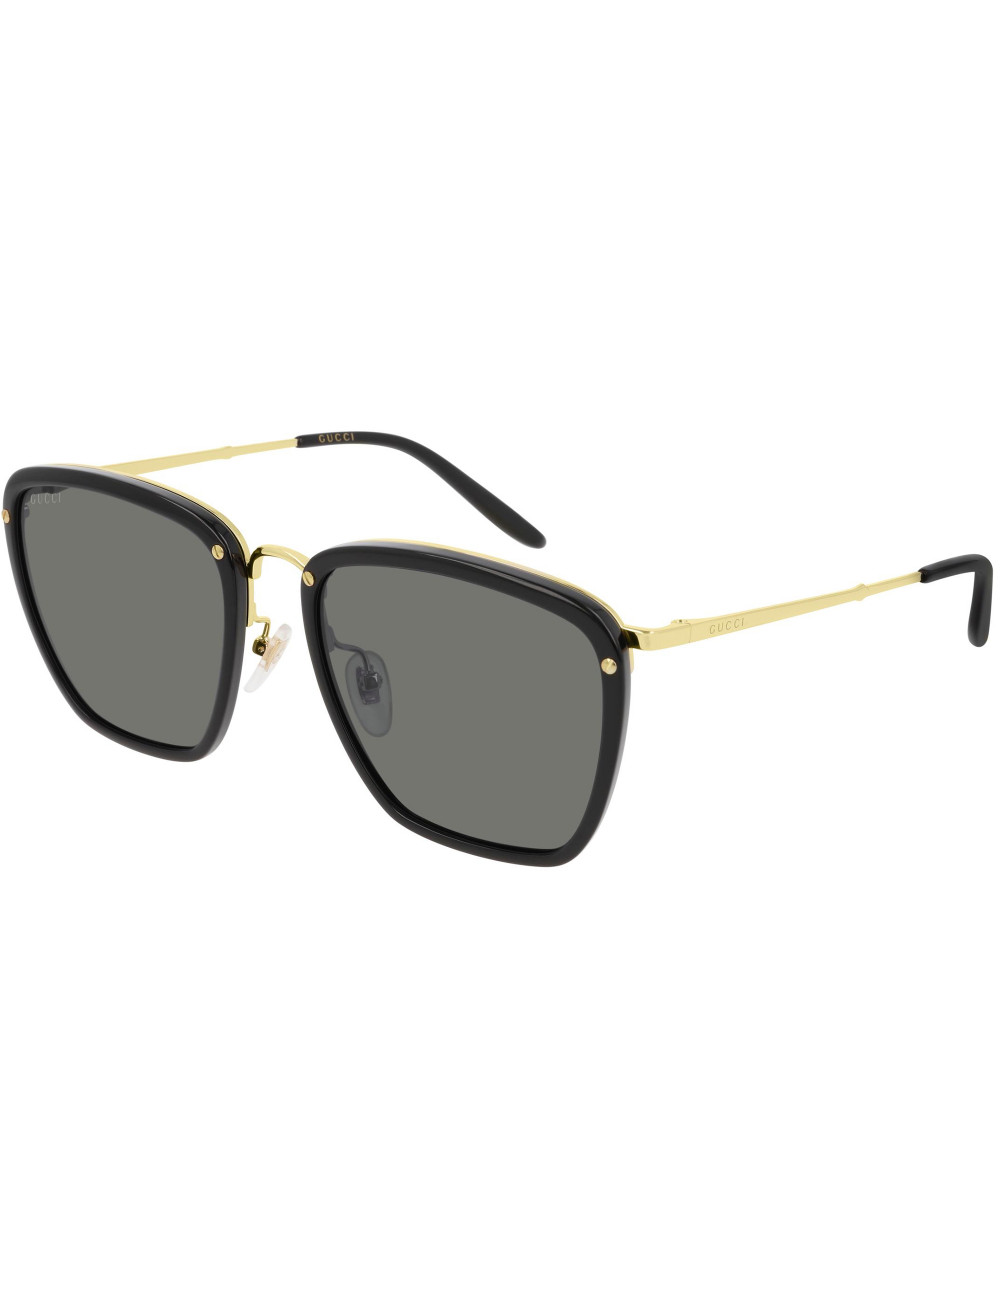 Buy Men's Gucci Sunglasses | SmartBuyGlasses India